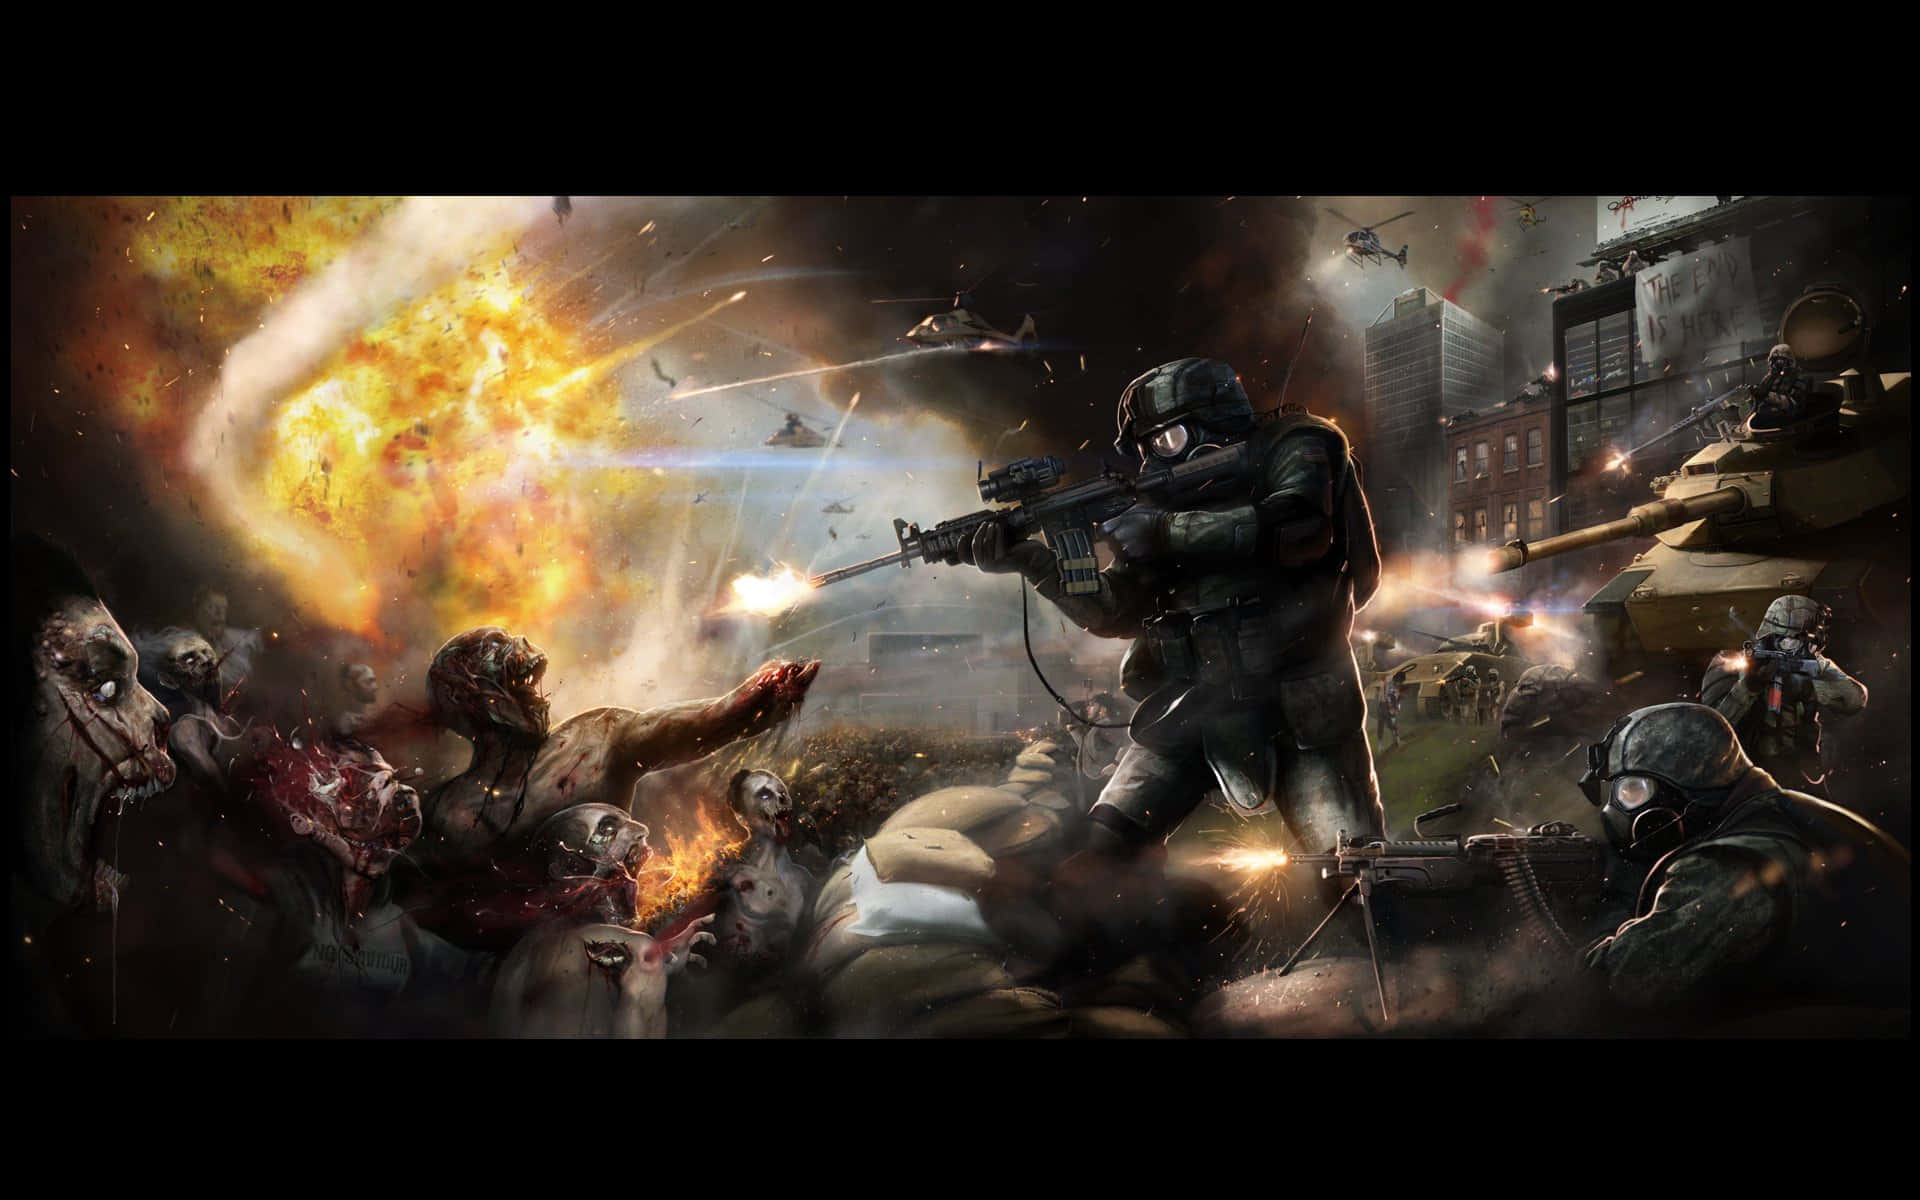 A fierce dark battle in an apocalyptic war Wallpaper